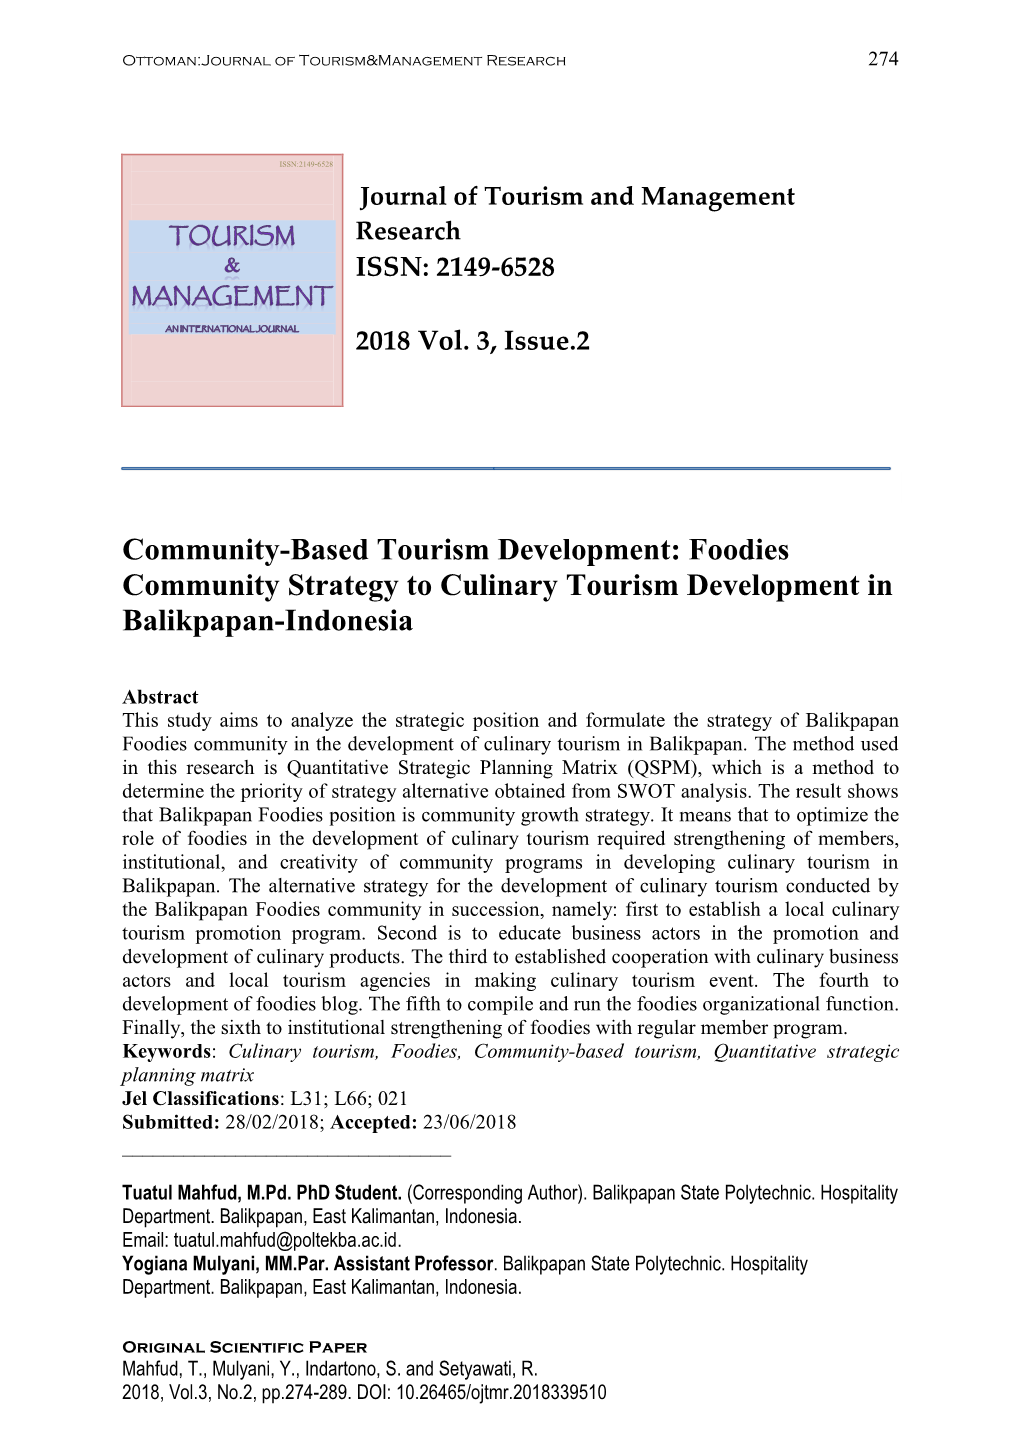 Community-Based Tourism Development: Foodies Community Strategy to Culinary Tourism Development in Balikpapan-Indonesia